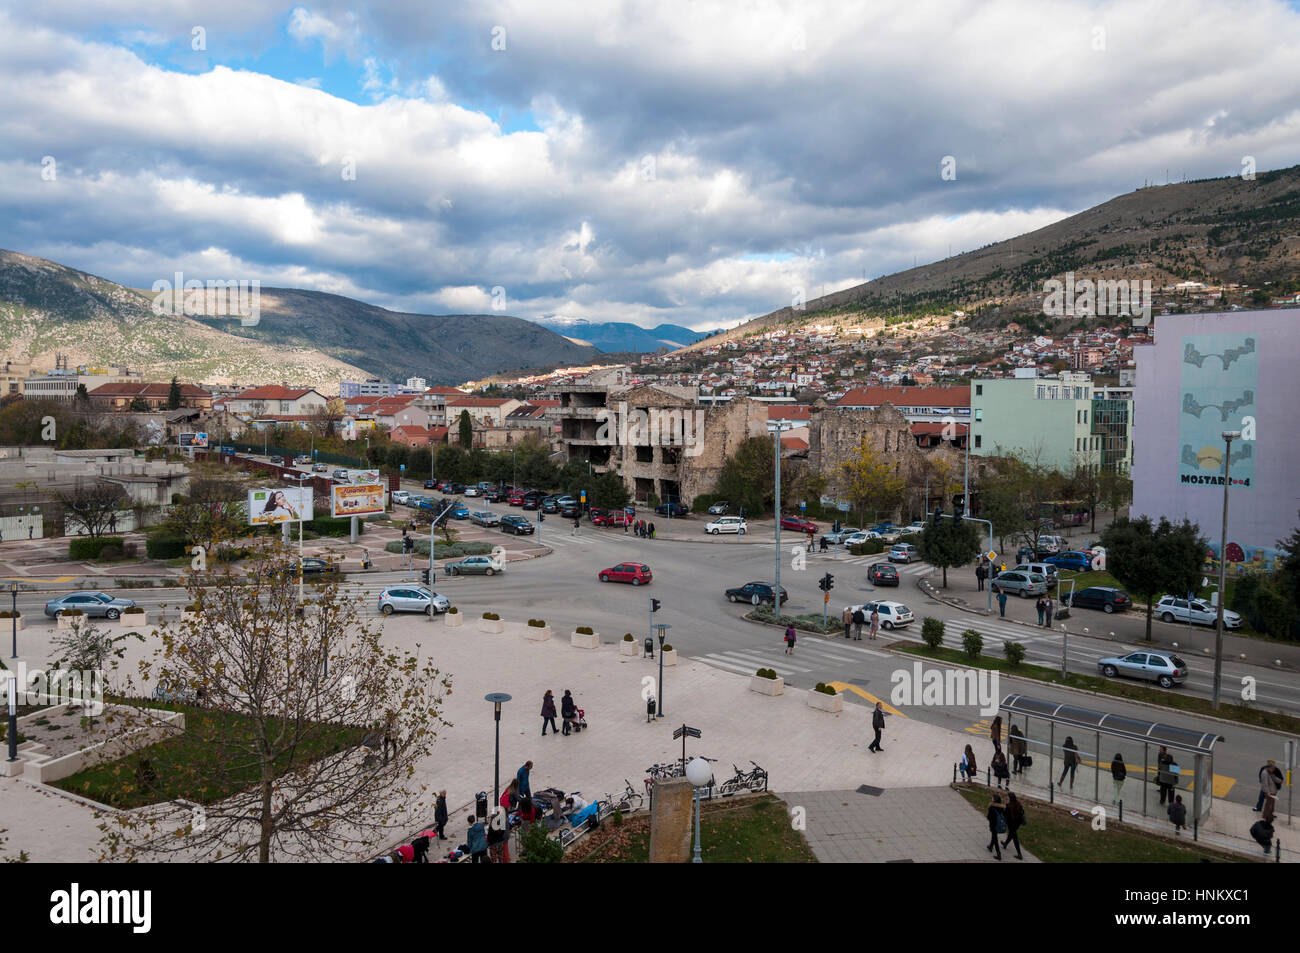 Mostar Bosnia Herzcegovina, Piazza ex frontline in guerra Foto Stock